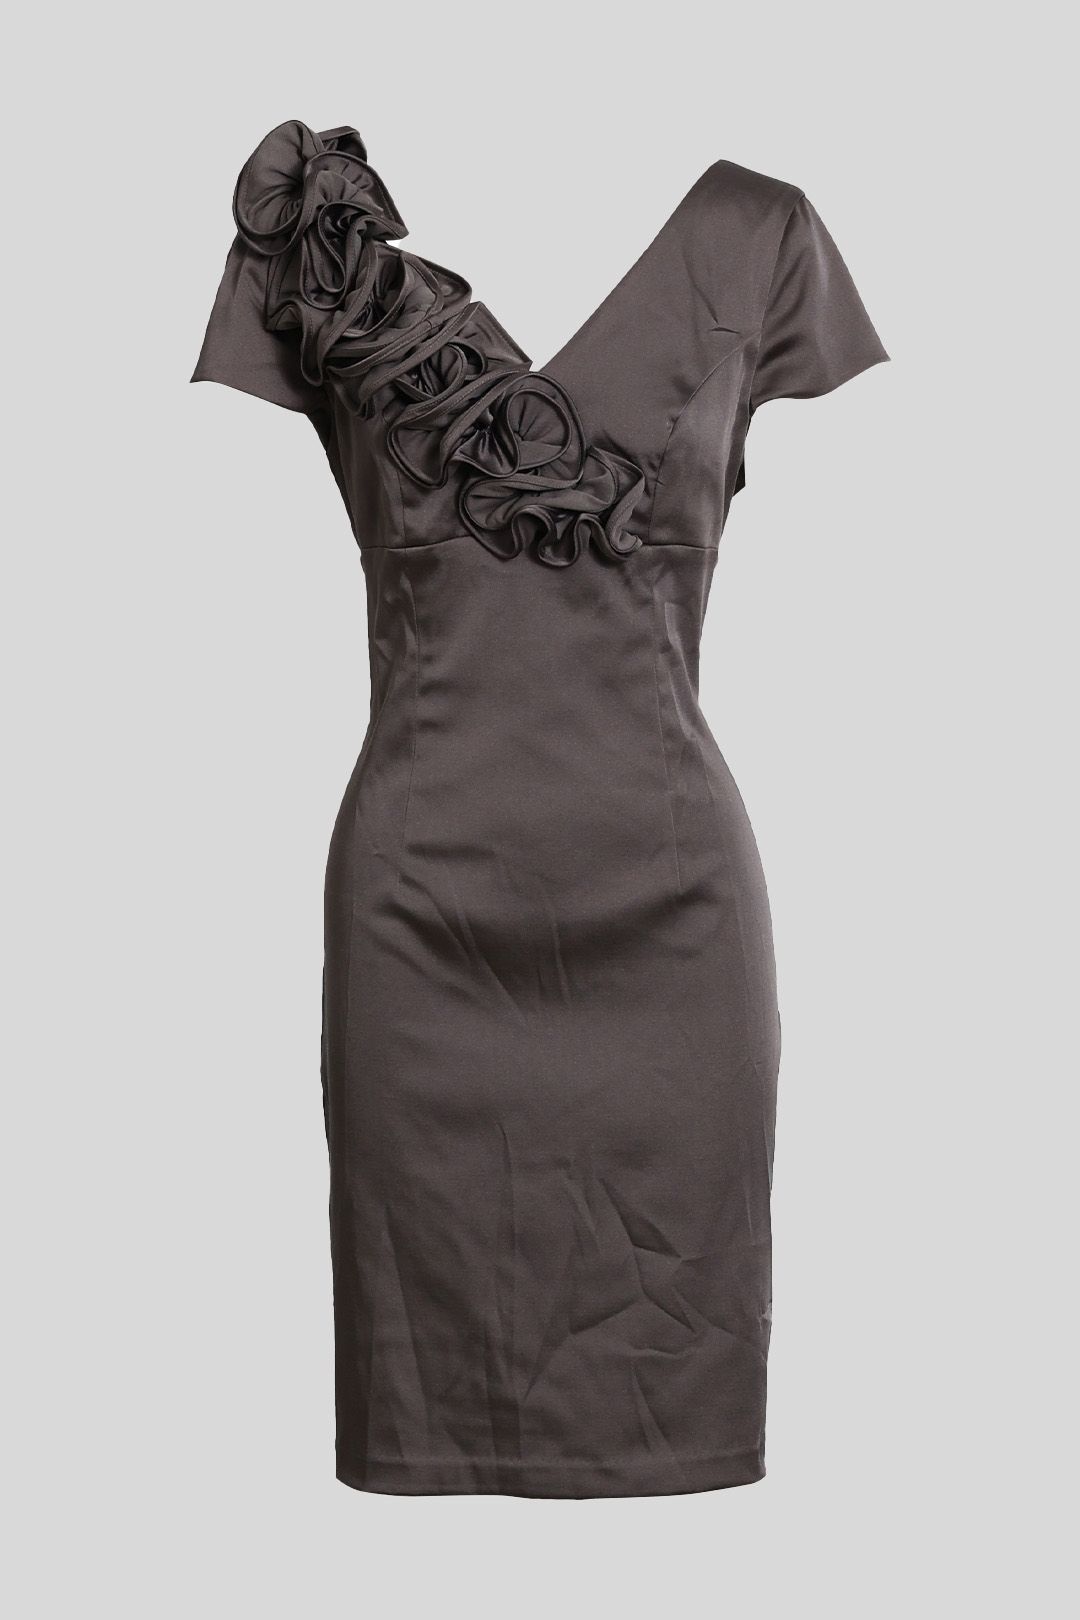 Montique - Ruffle Bodice Grey Short Dress